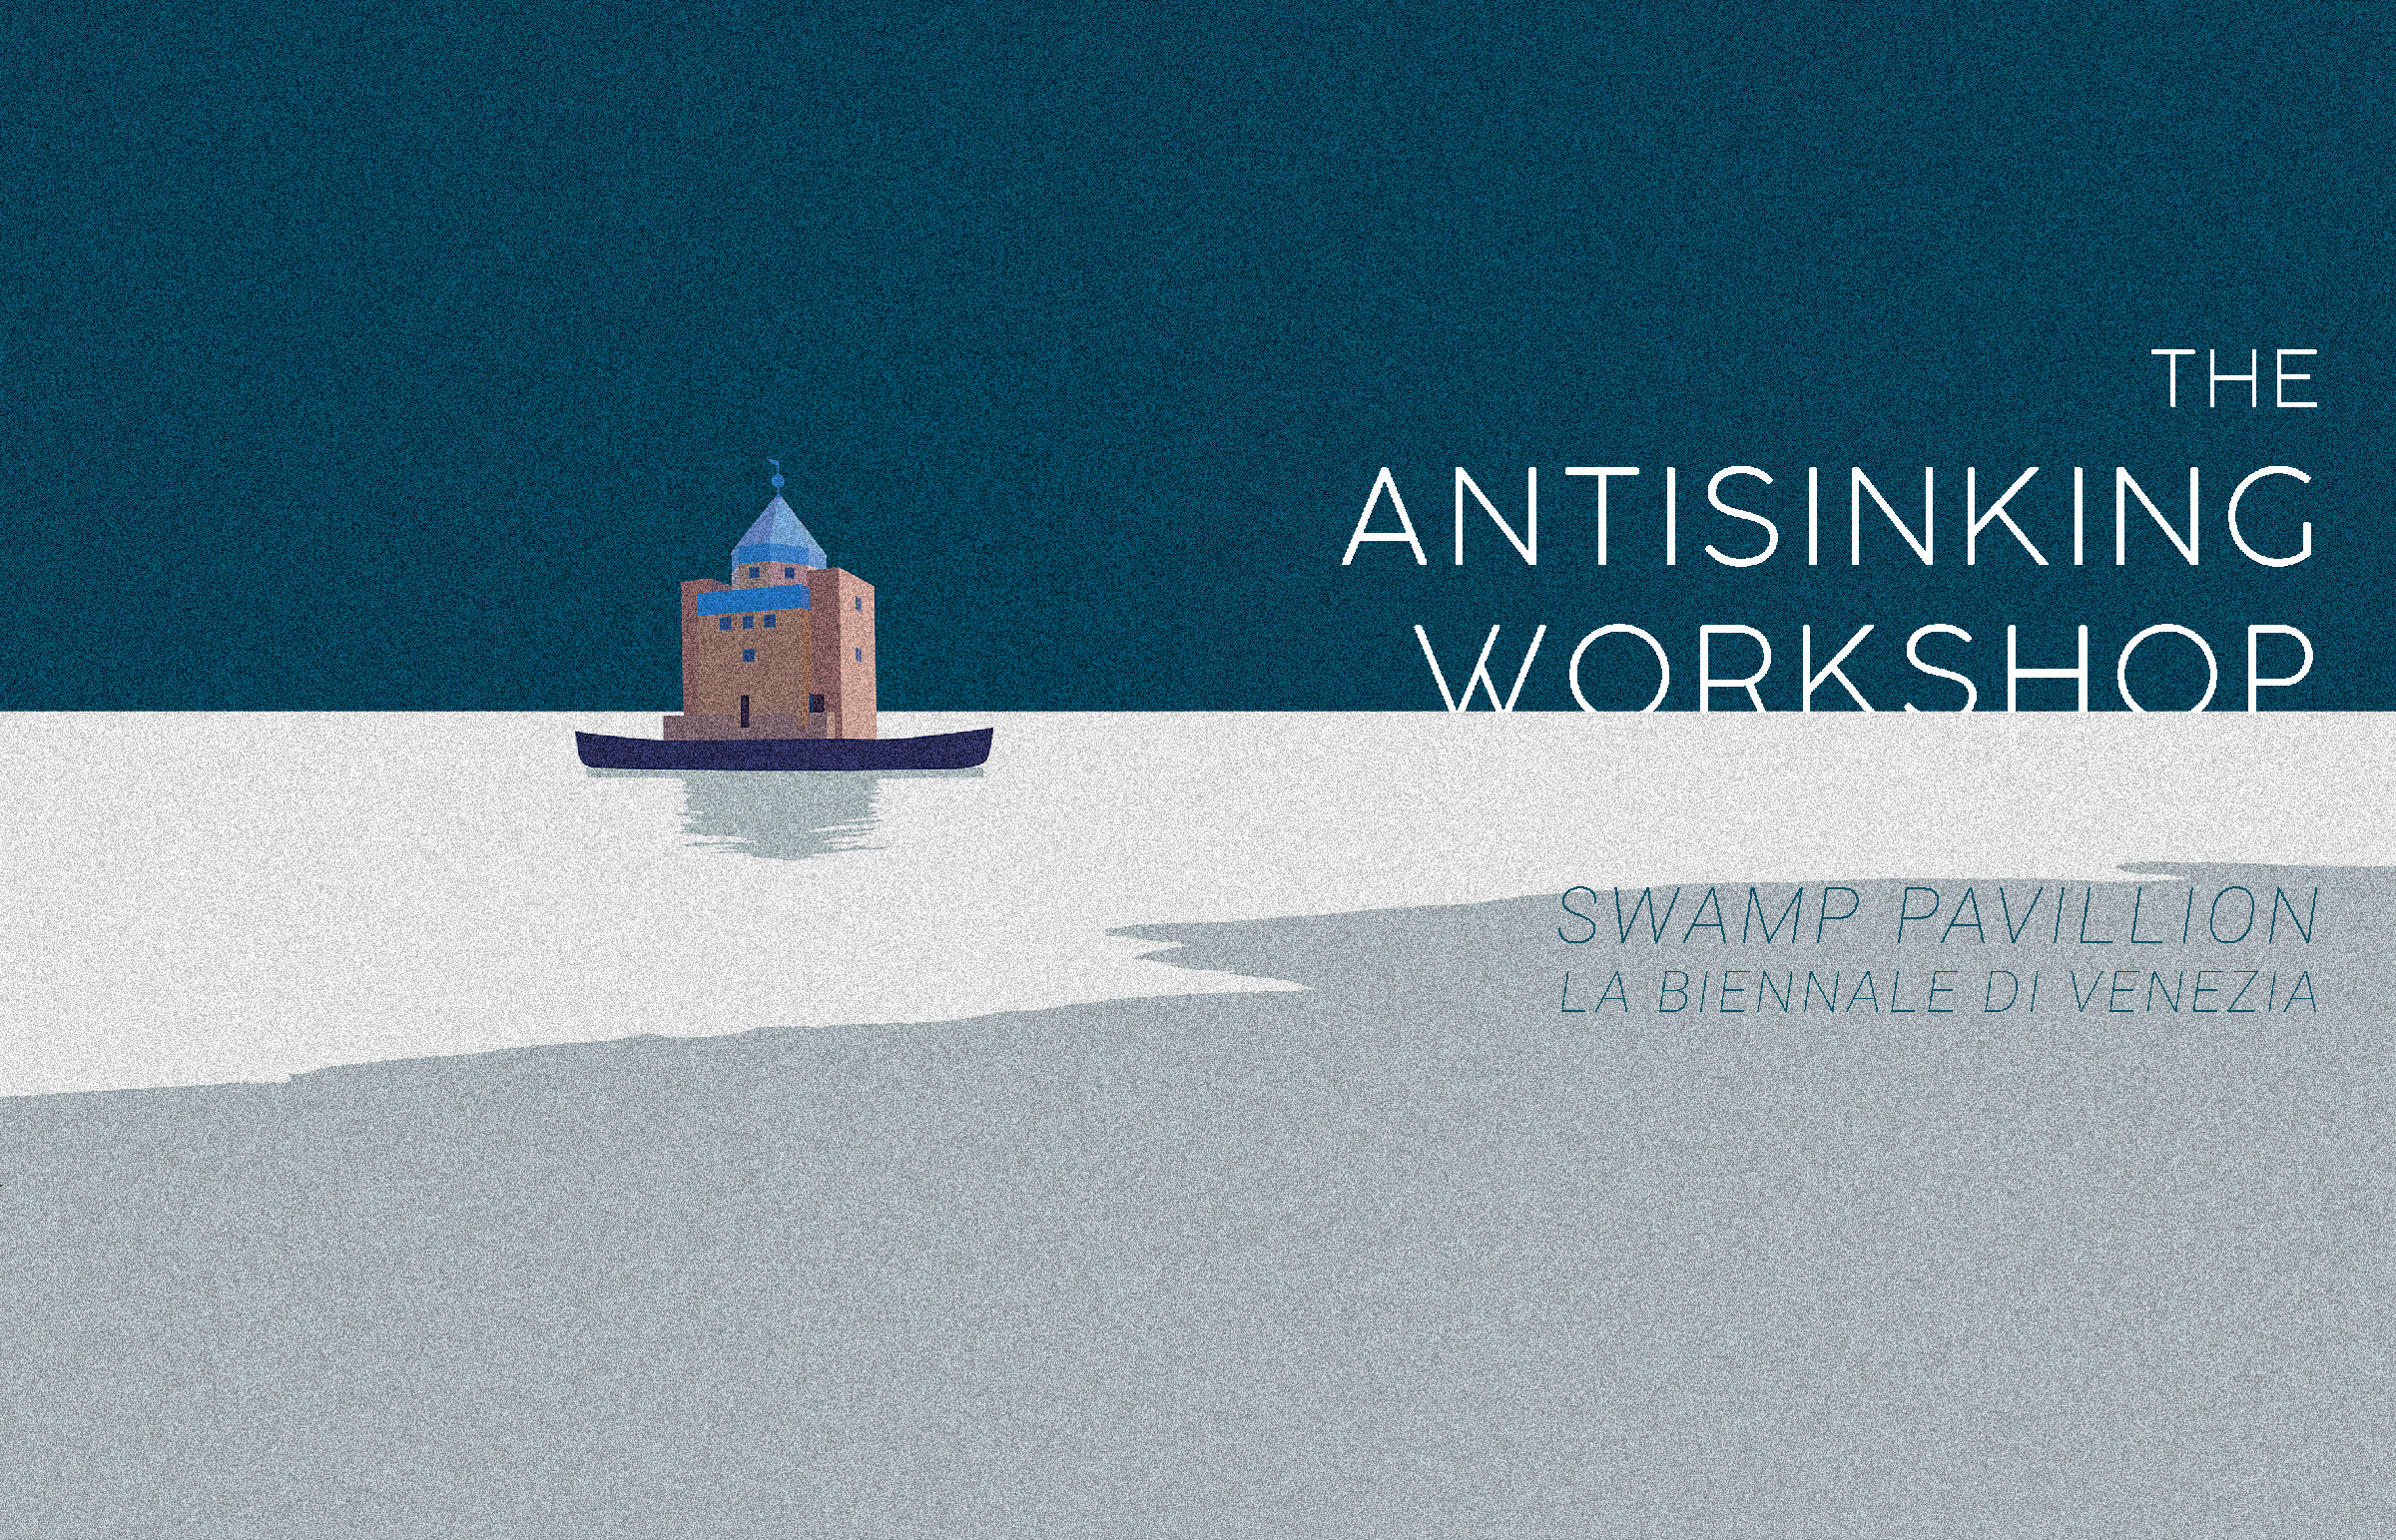 Antisinking workshop